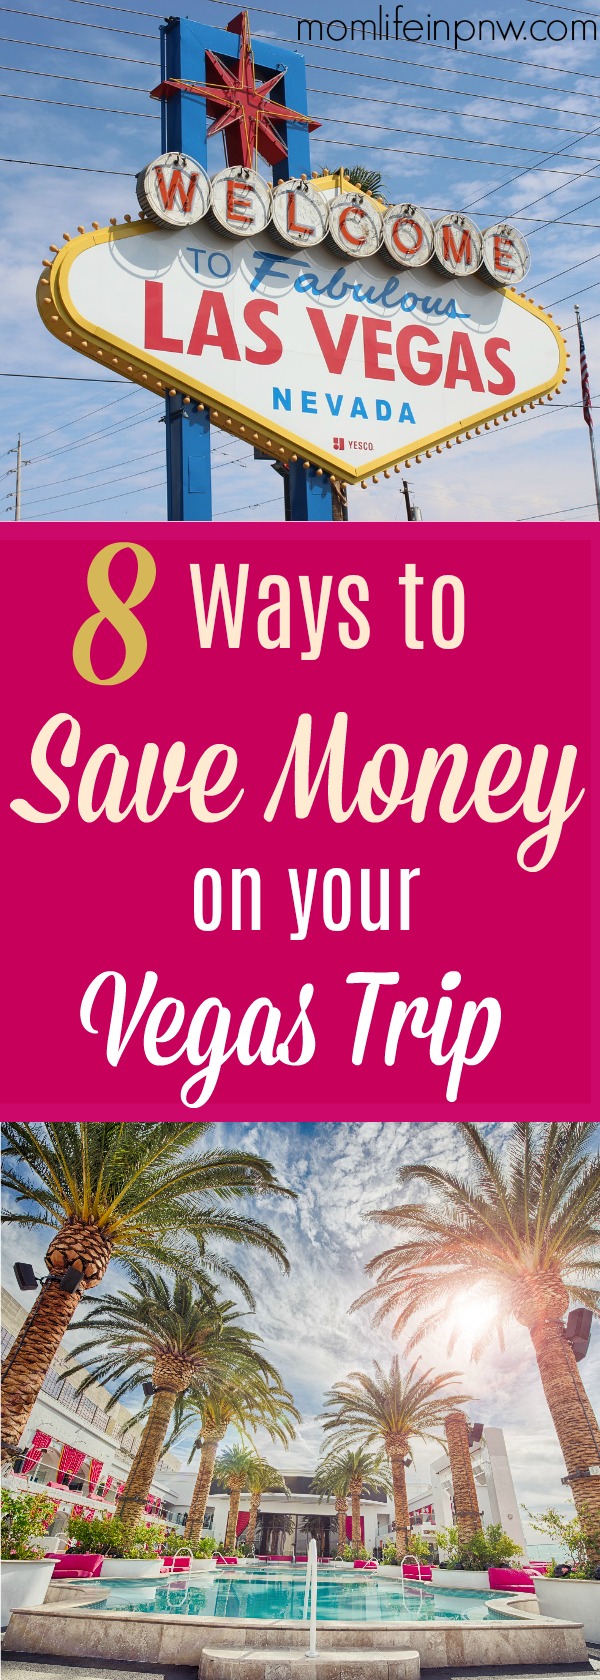 8 Ways to Save Money on Your Vegas Trip